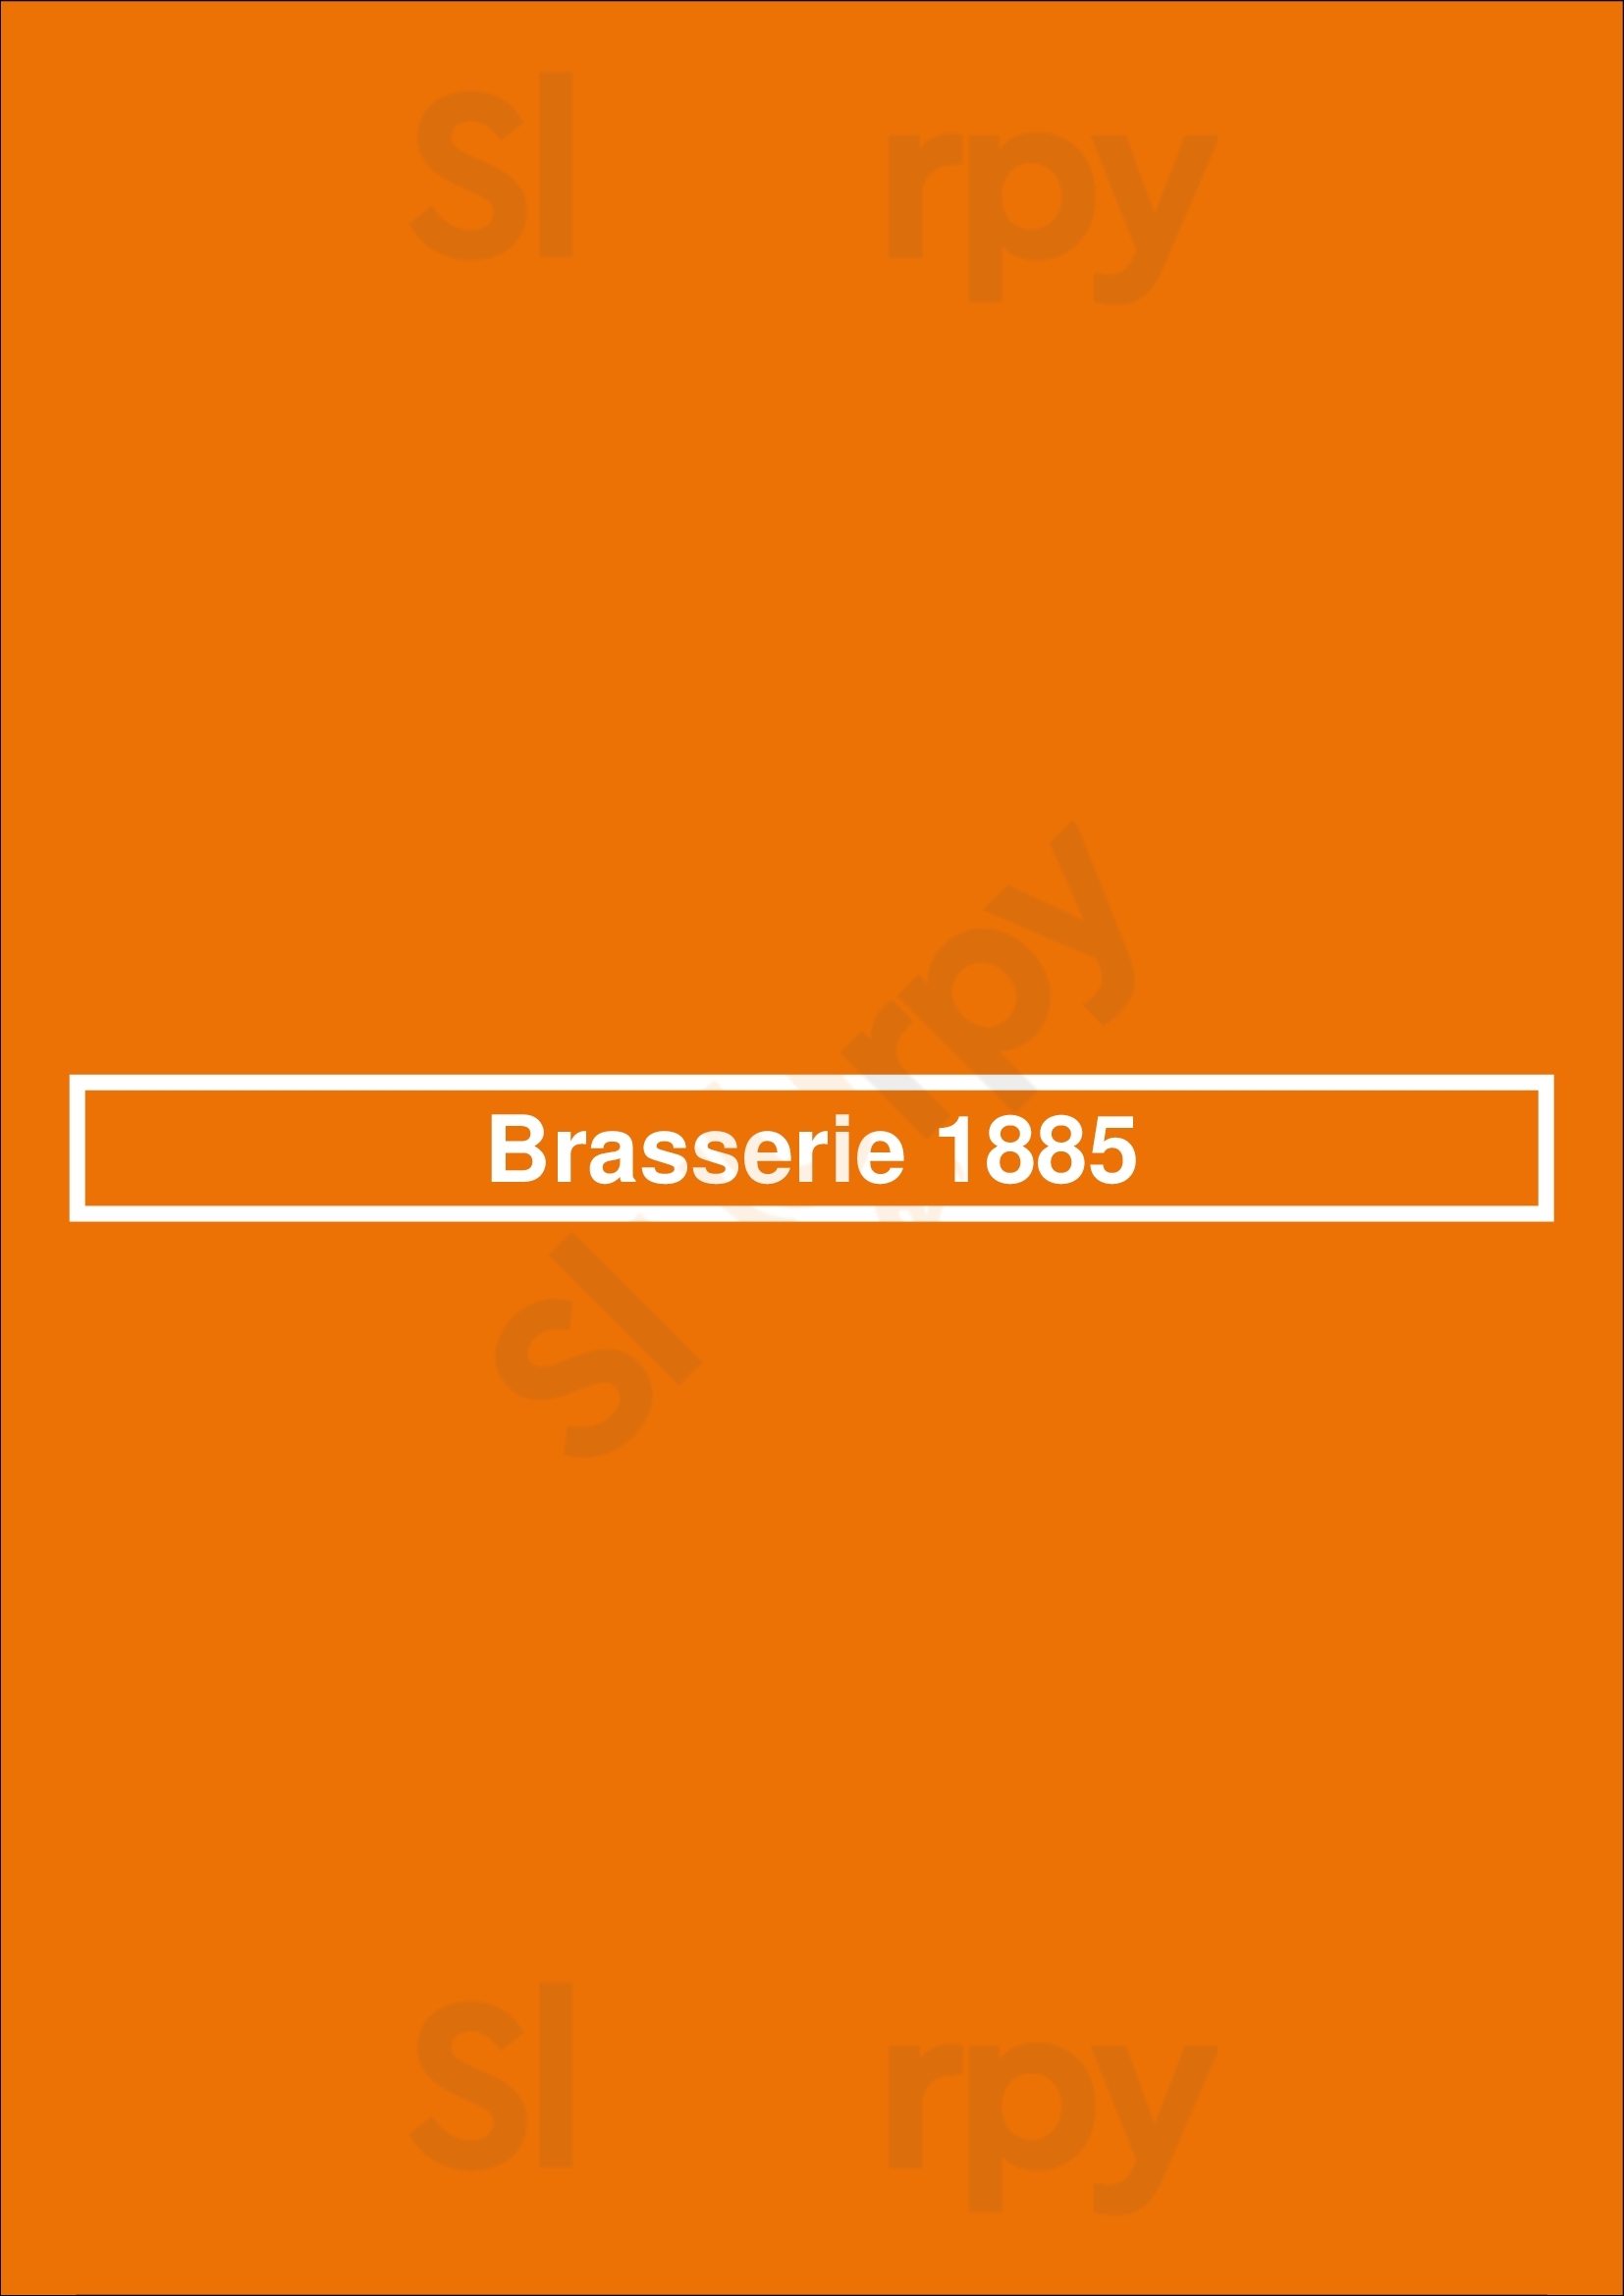 Brasserie 1885 Woudenberg Menu - 1